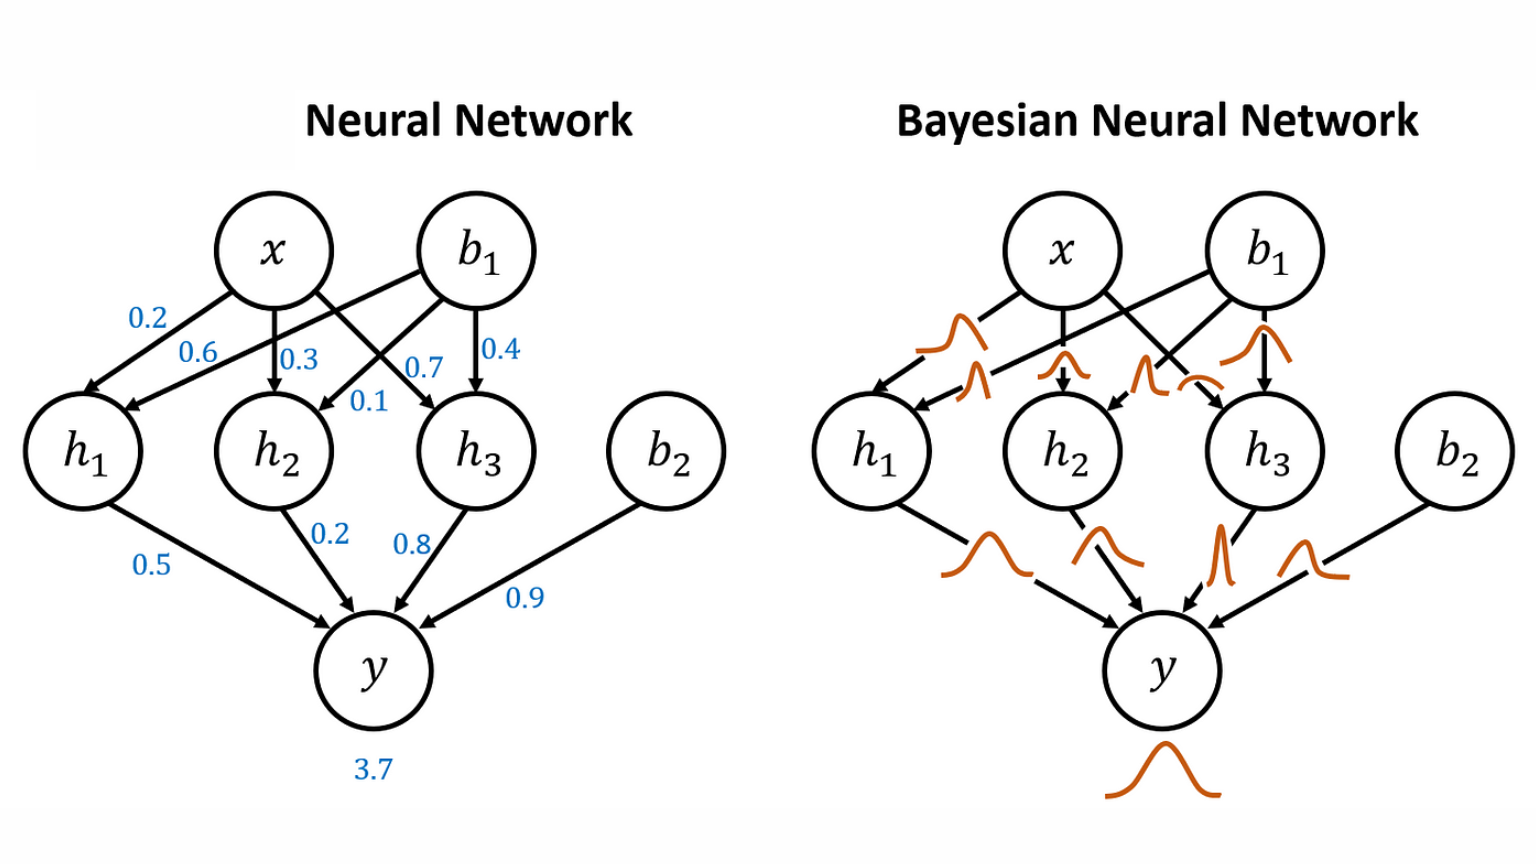 Bayesian Network vs Neural Network: Bayesian Network vs Neural Network